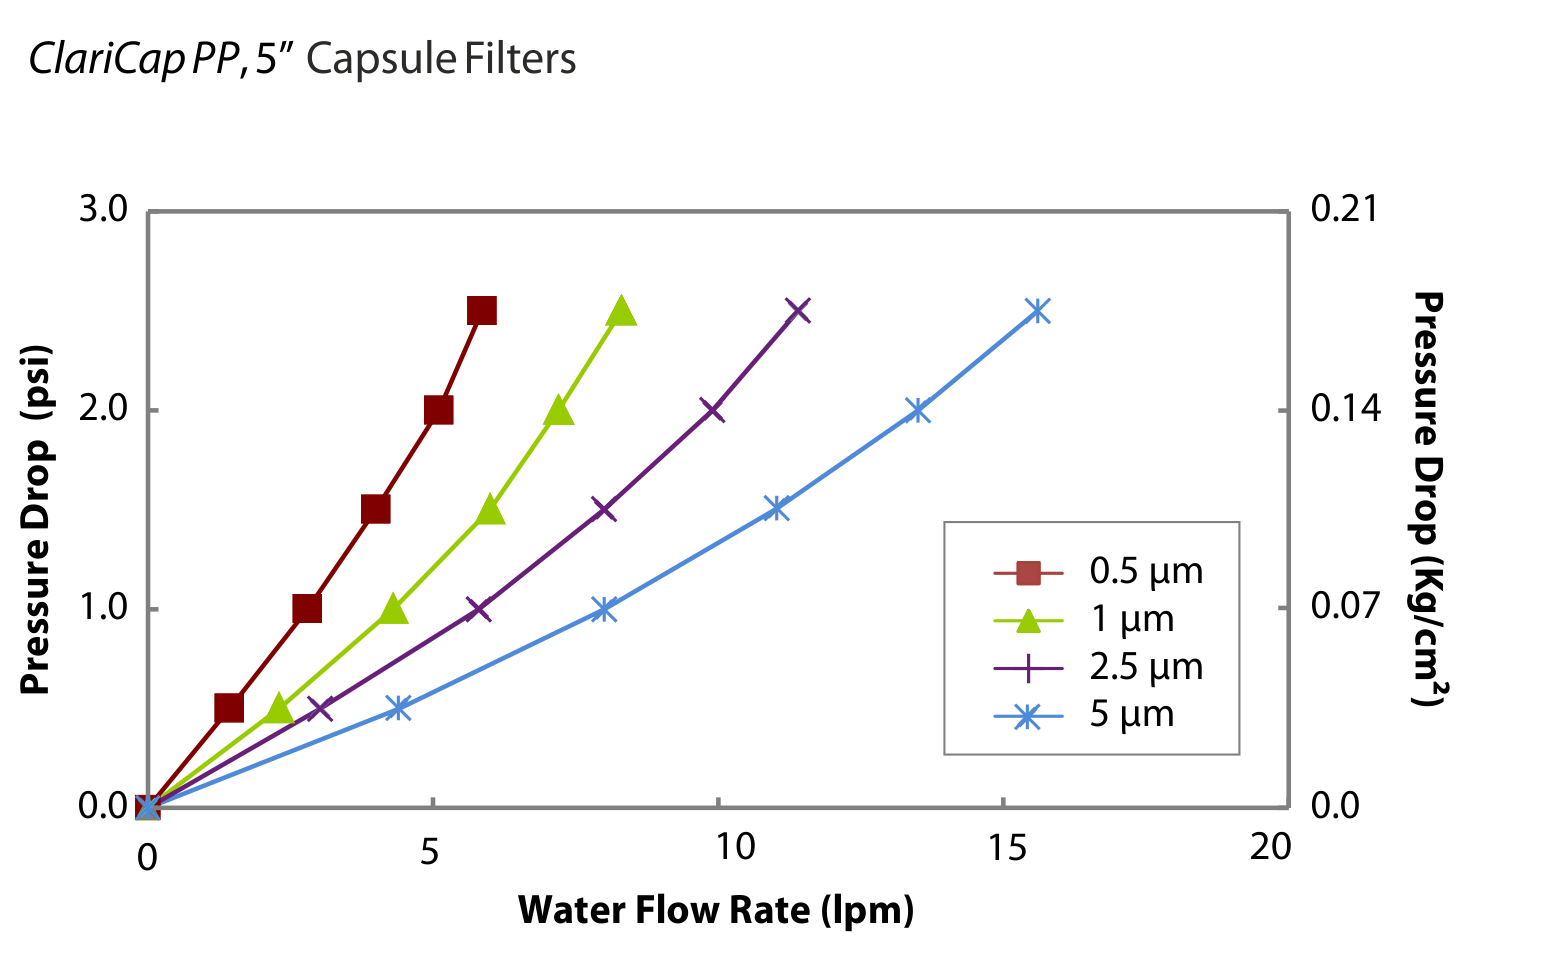 ClariCap PP Small flow rates